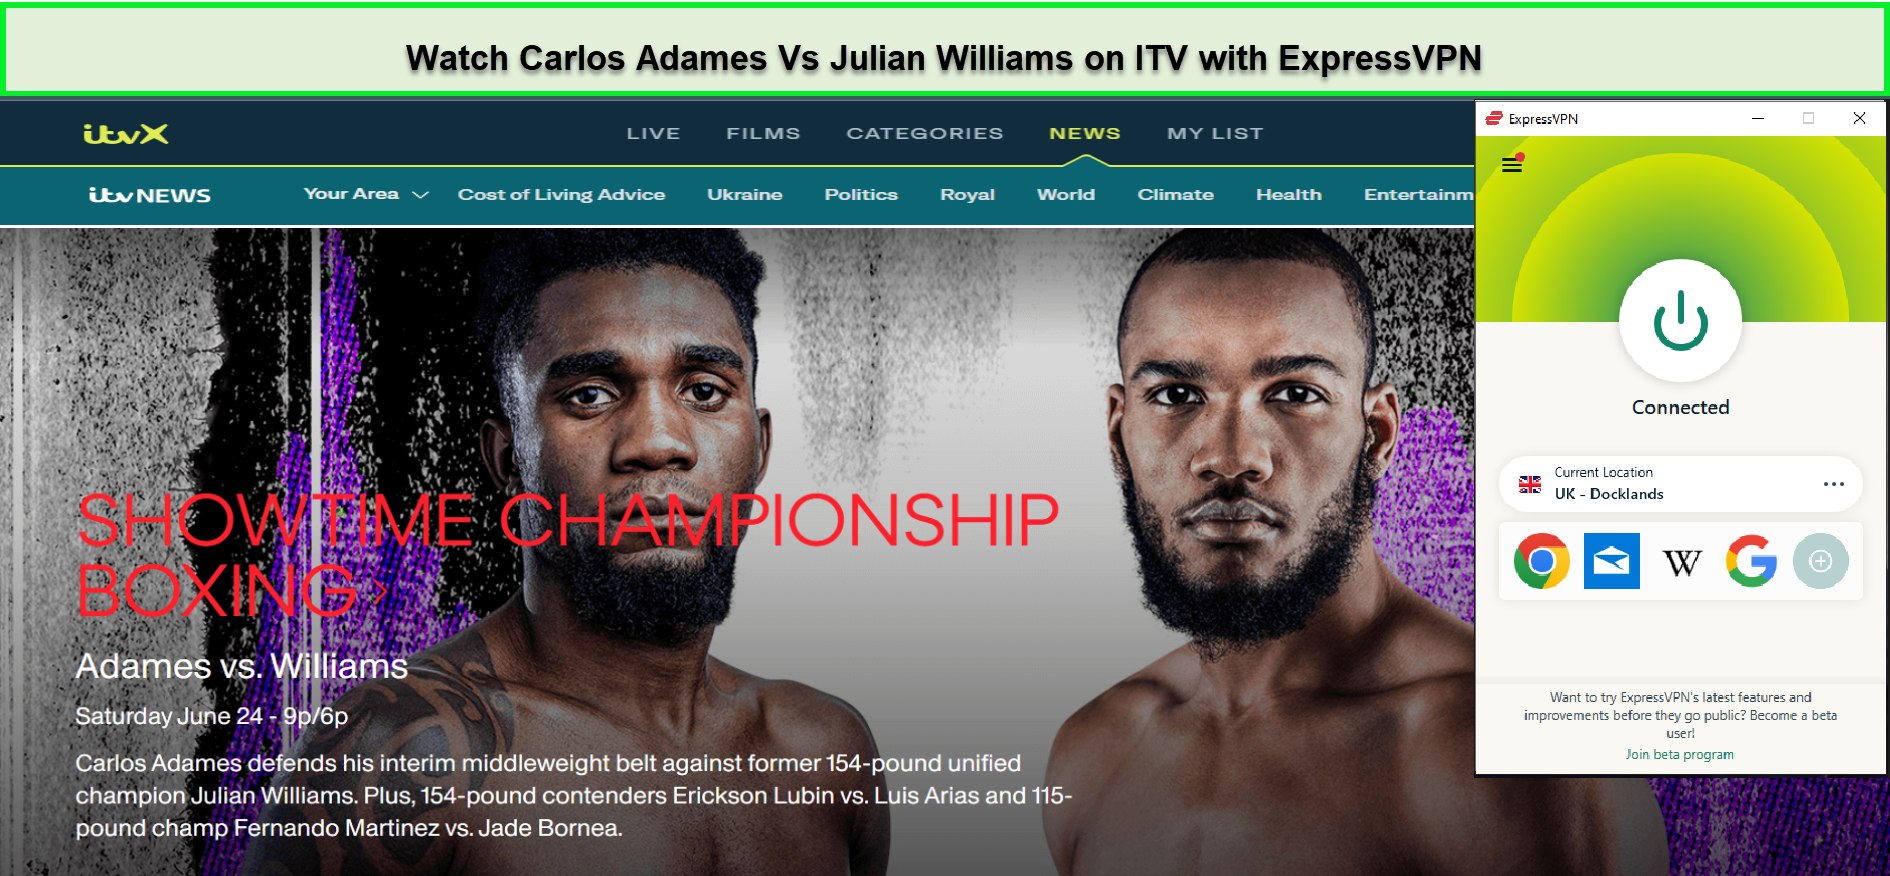 Watch-Carlos-Adames-Vs-Julian-Williams-in-USA-on-ITV-with-ExpressVPN